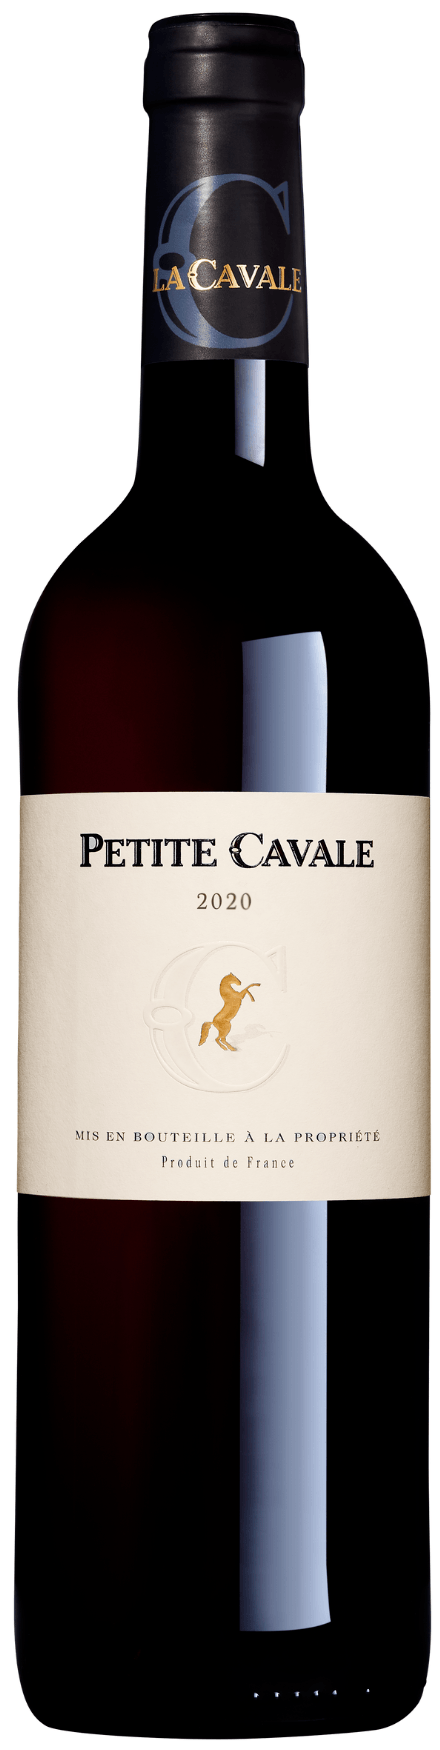 Petite Cavale rouge 2020 - Domaine La Cavale